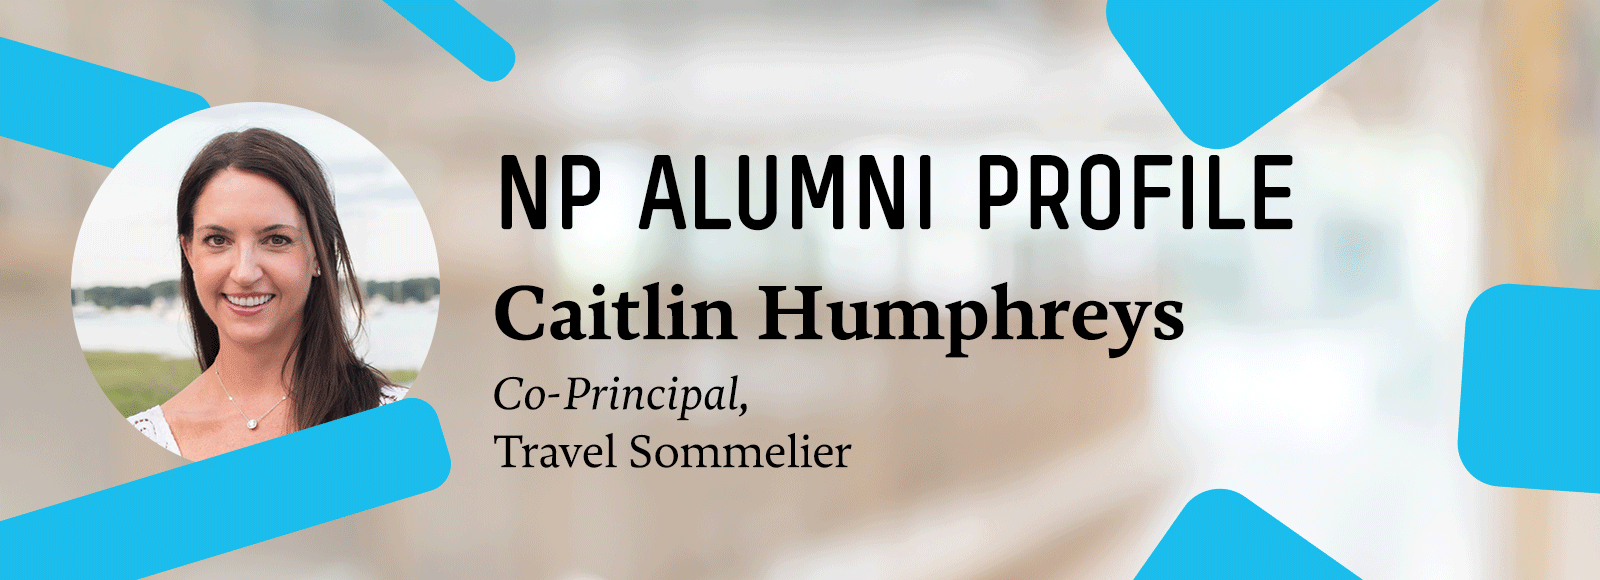 Caitlin Humphreys - NP Alumni Profile